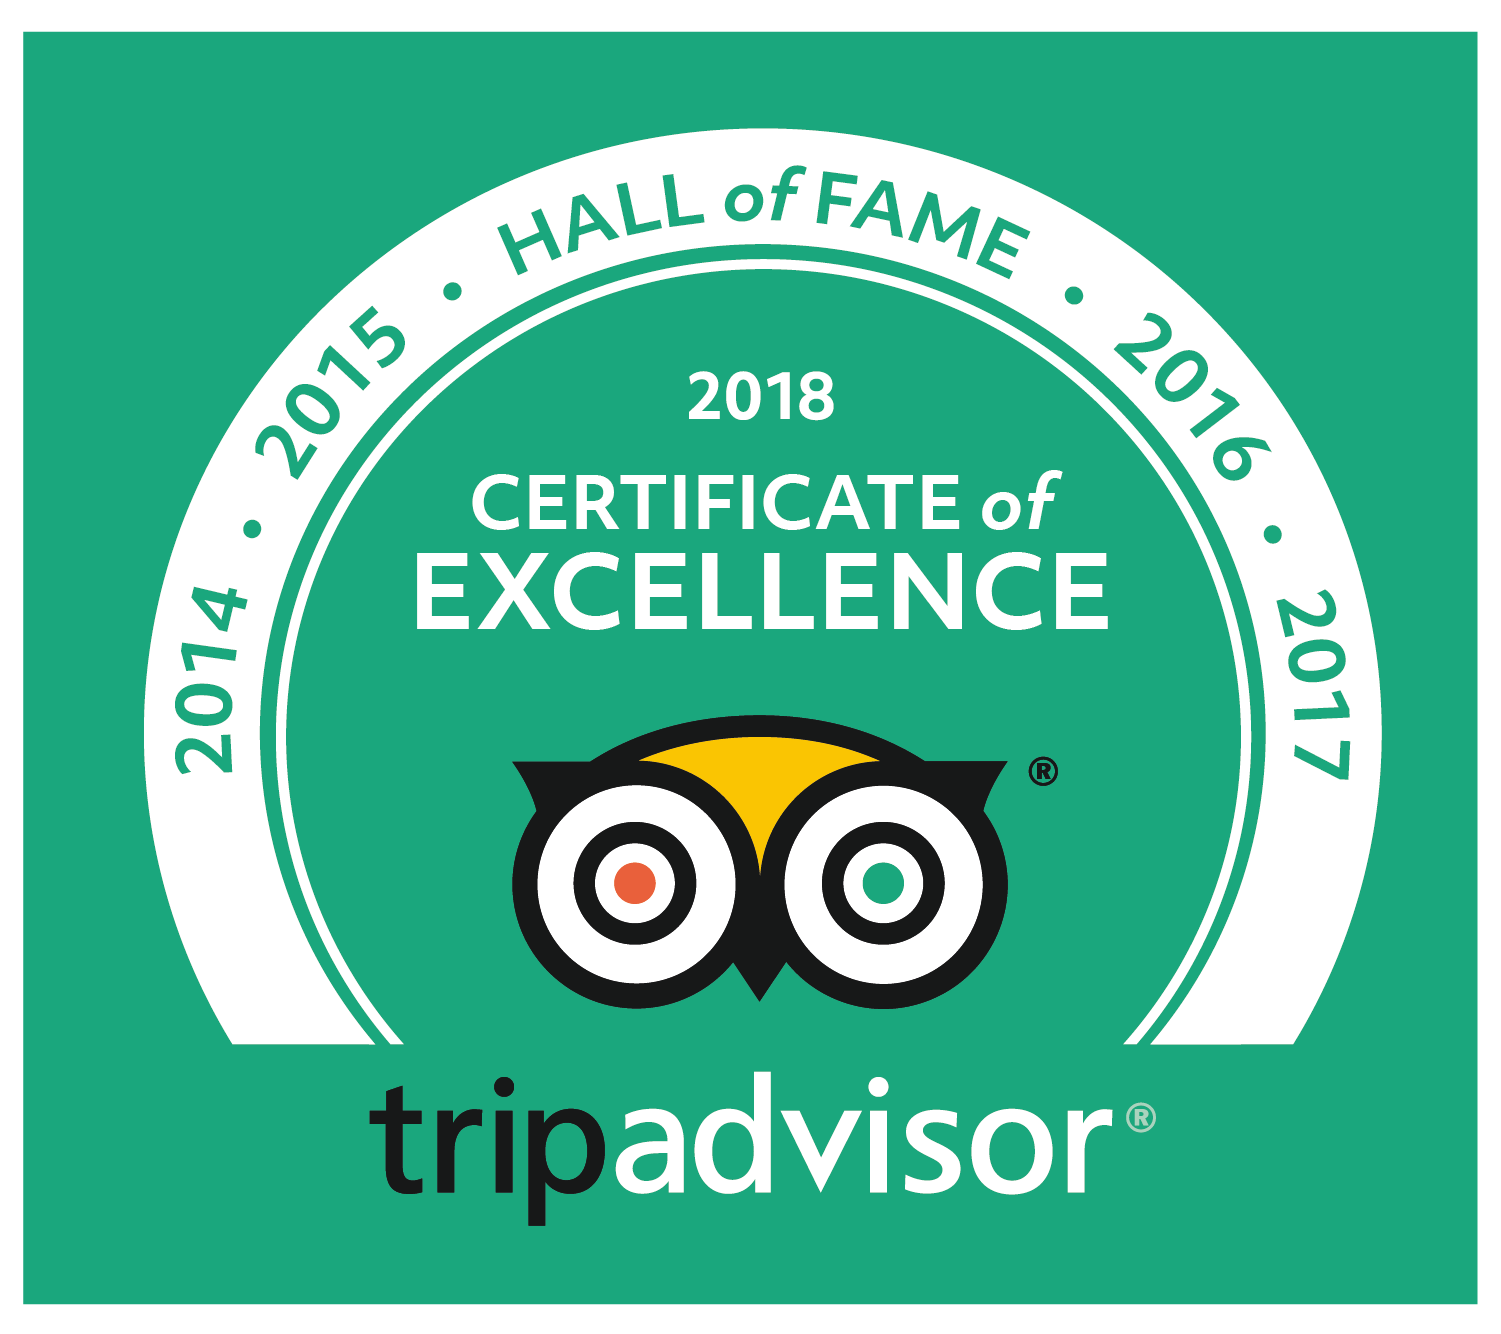 tripadvisor certificate of excellence